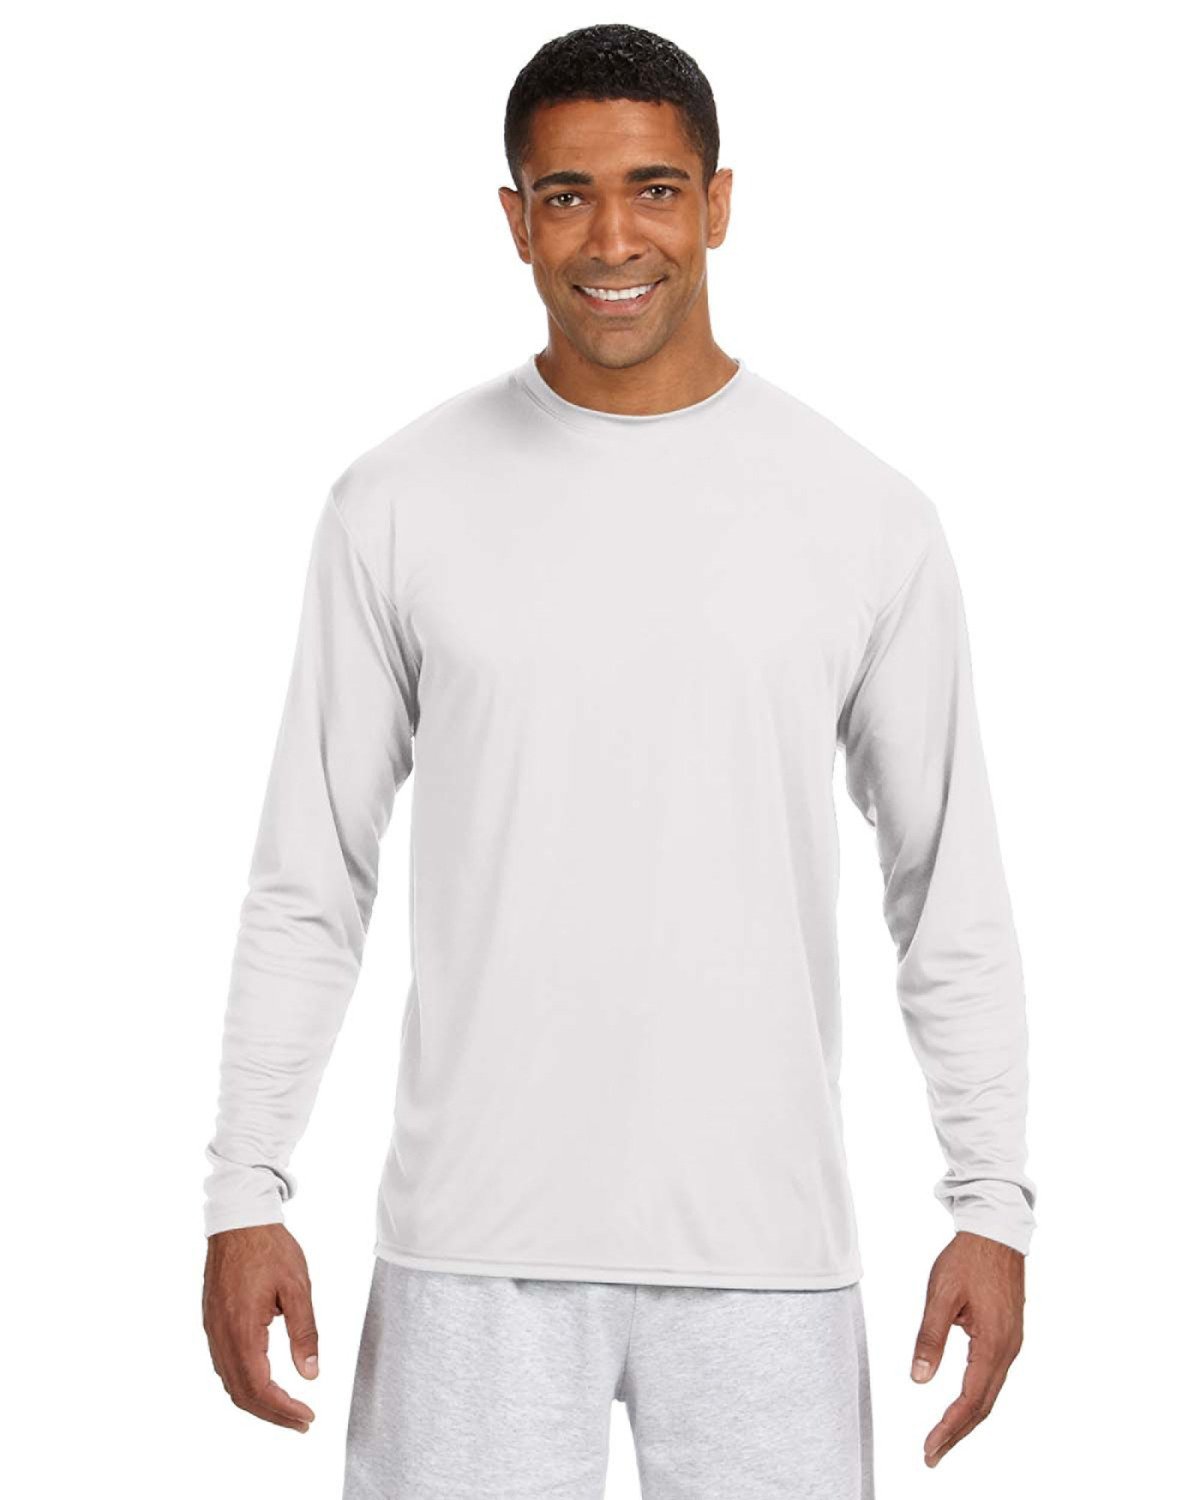 A4 Men's Cooling Performance Long Sleeve T-Shirt: Unleash Your Comfort